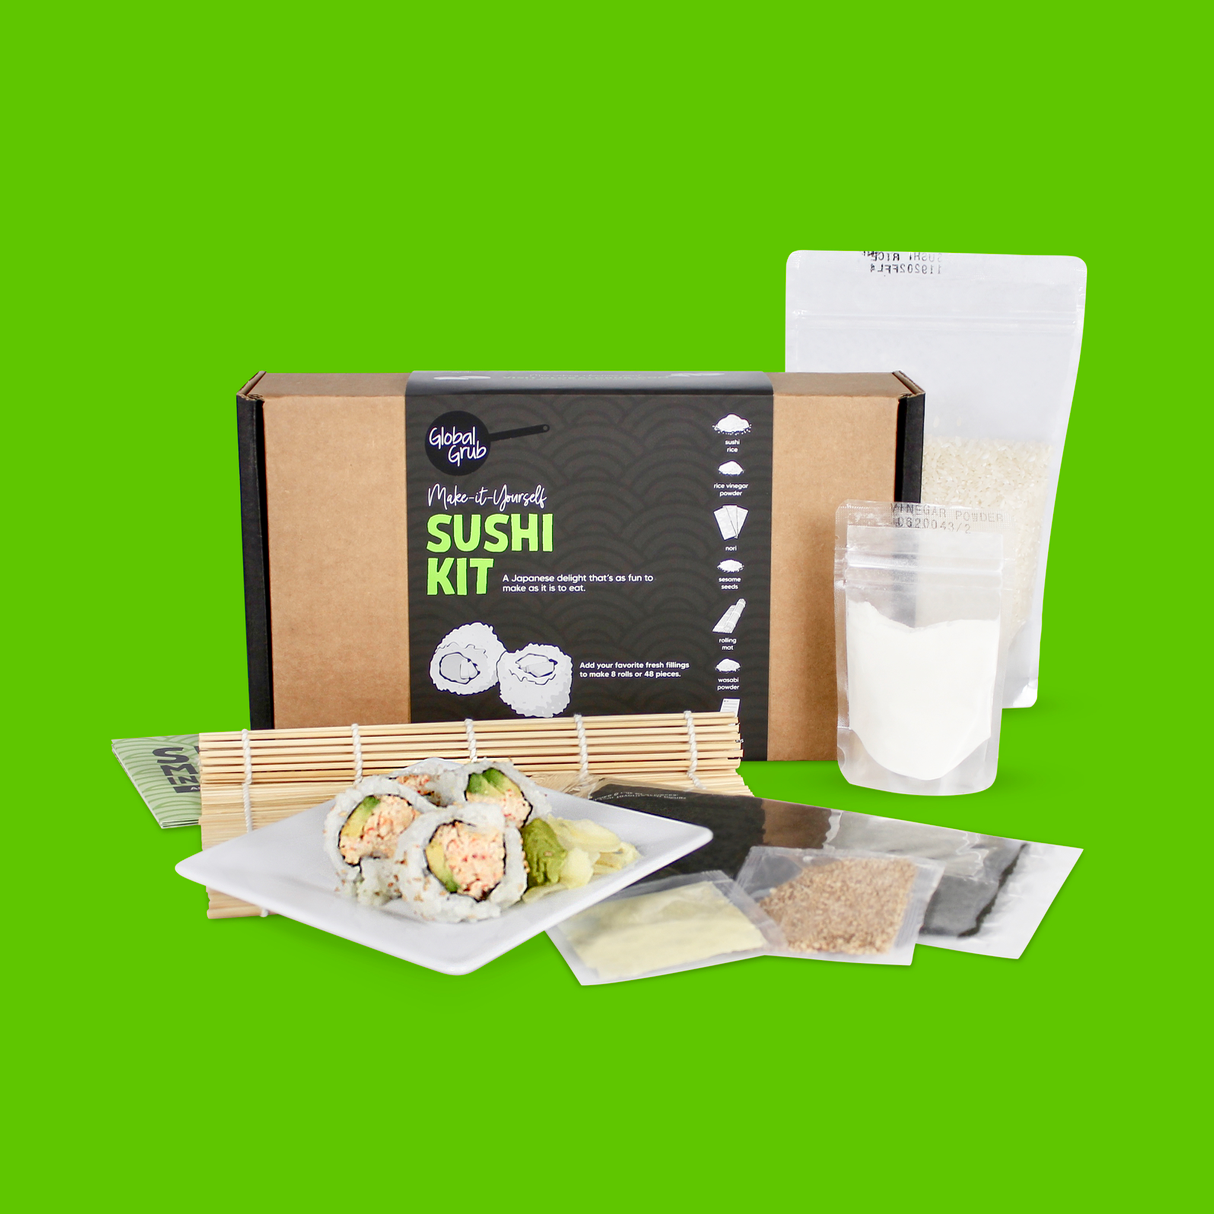 Sushi Kit includes sushi rice, rice vinegar powder, nori, sesame seeds, wasabi, instructions